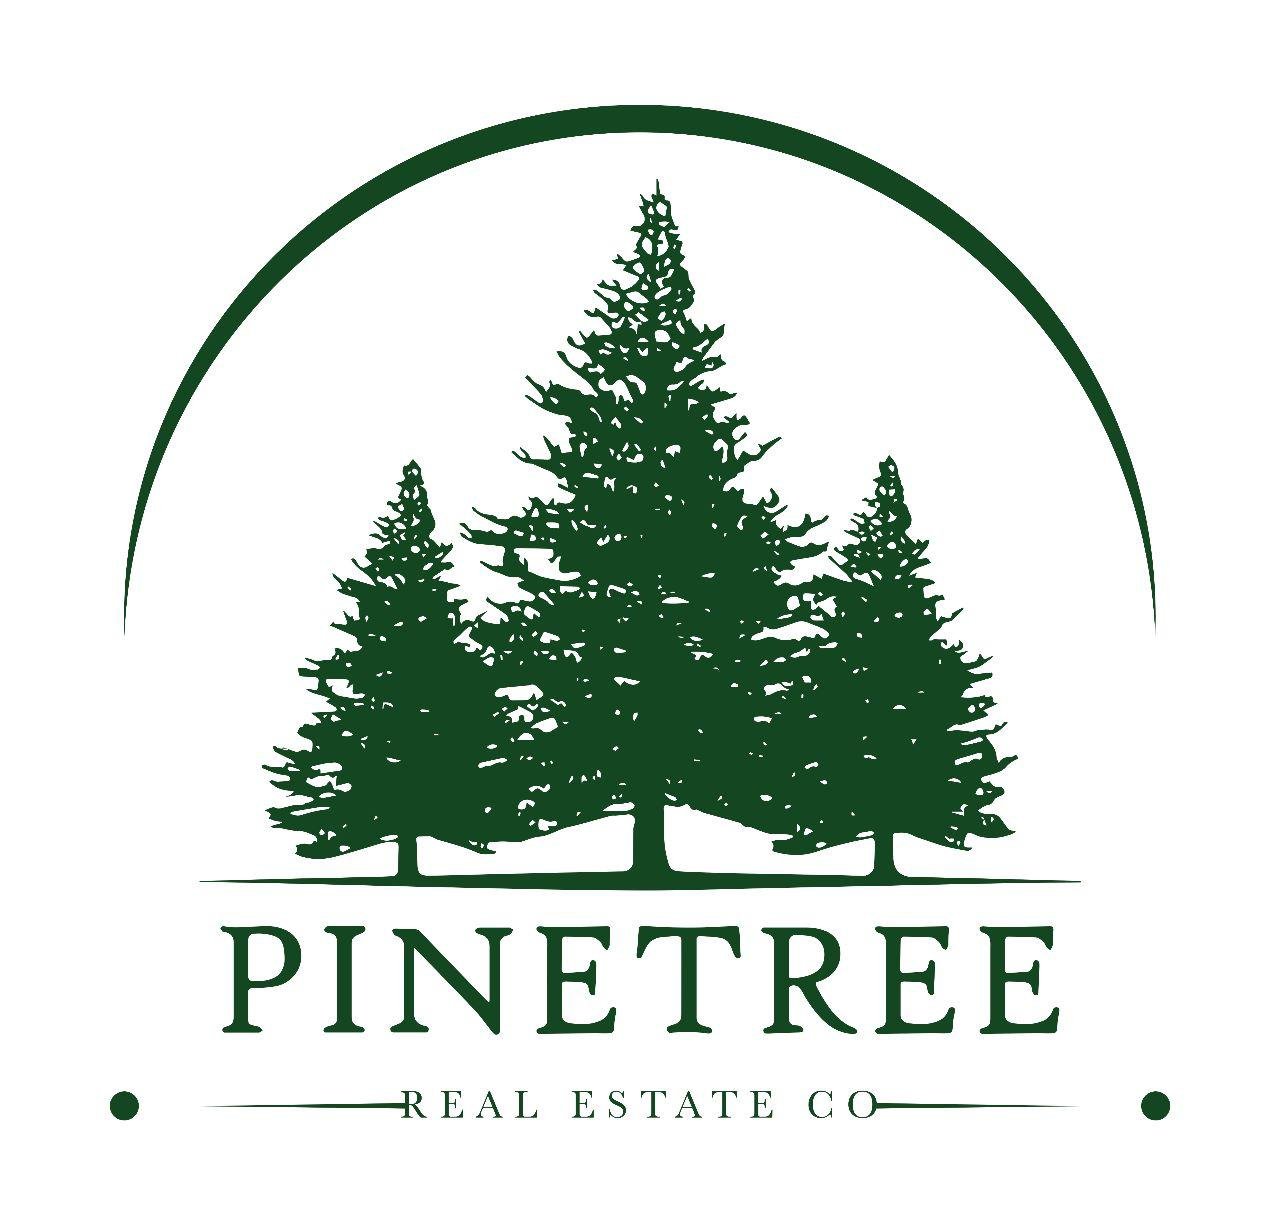 PineTree Real Estate Company in Dubai-